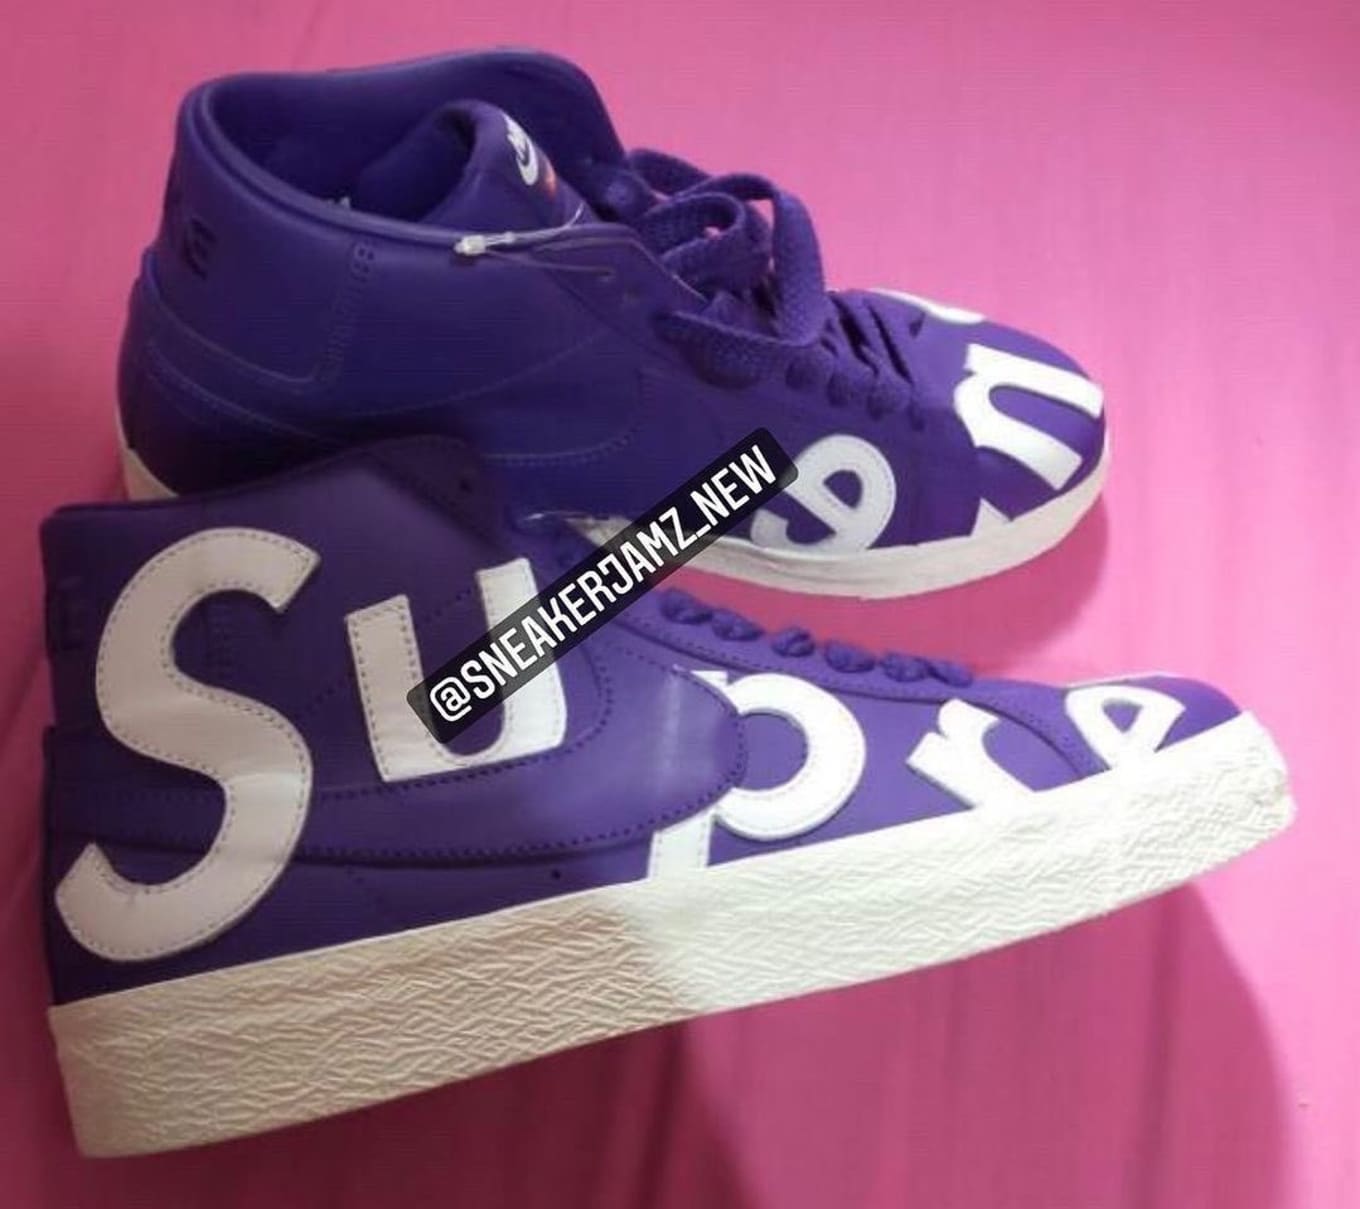 New Supreme x Nike SB Blazer Sample Purple First Look | Sole Collector